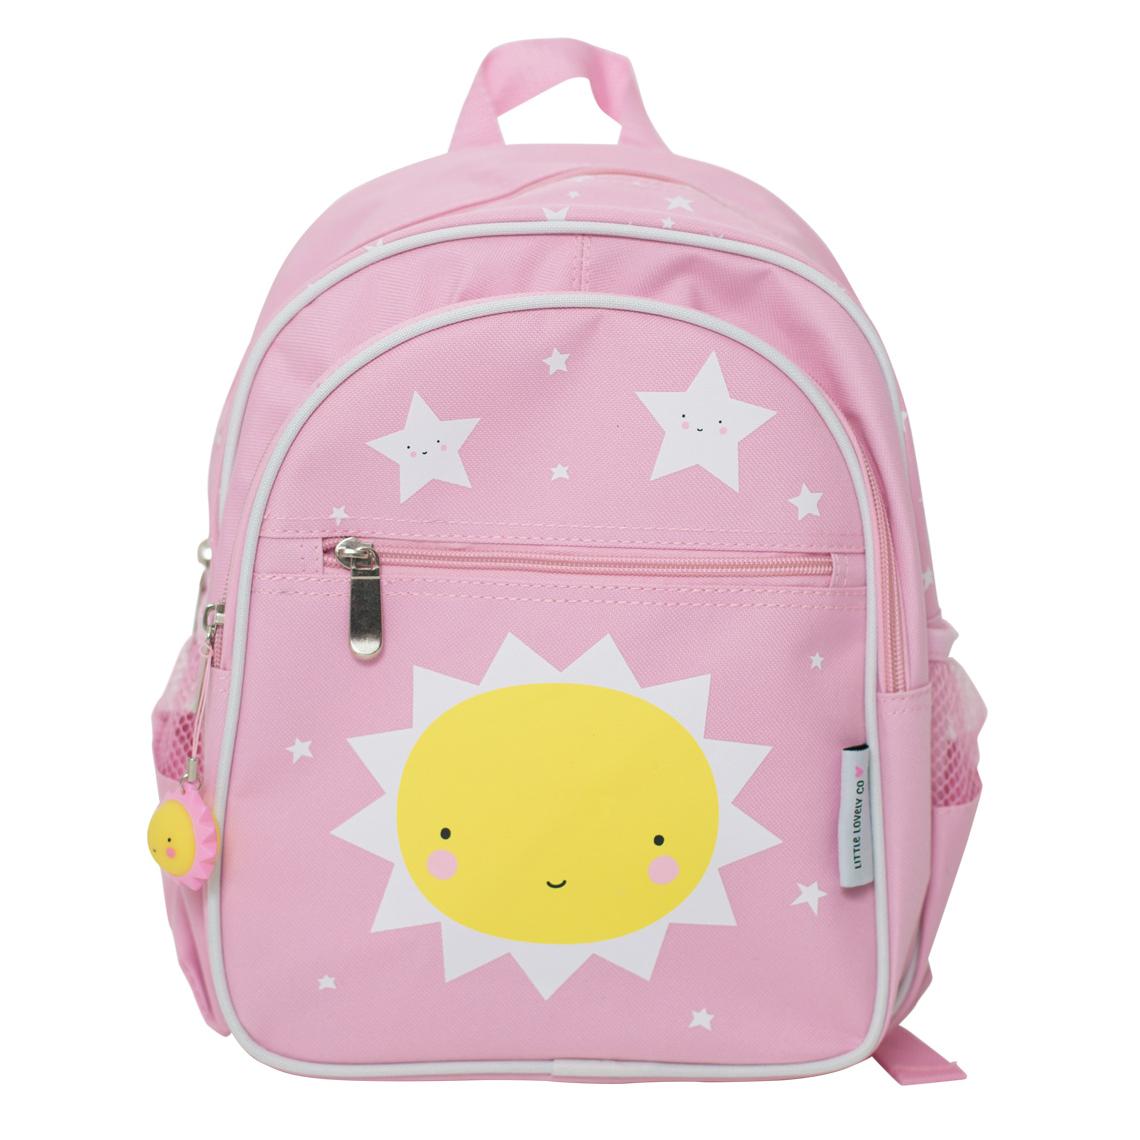 Рюкзак с солнцем A Little Lovely Company, розовый, большой